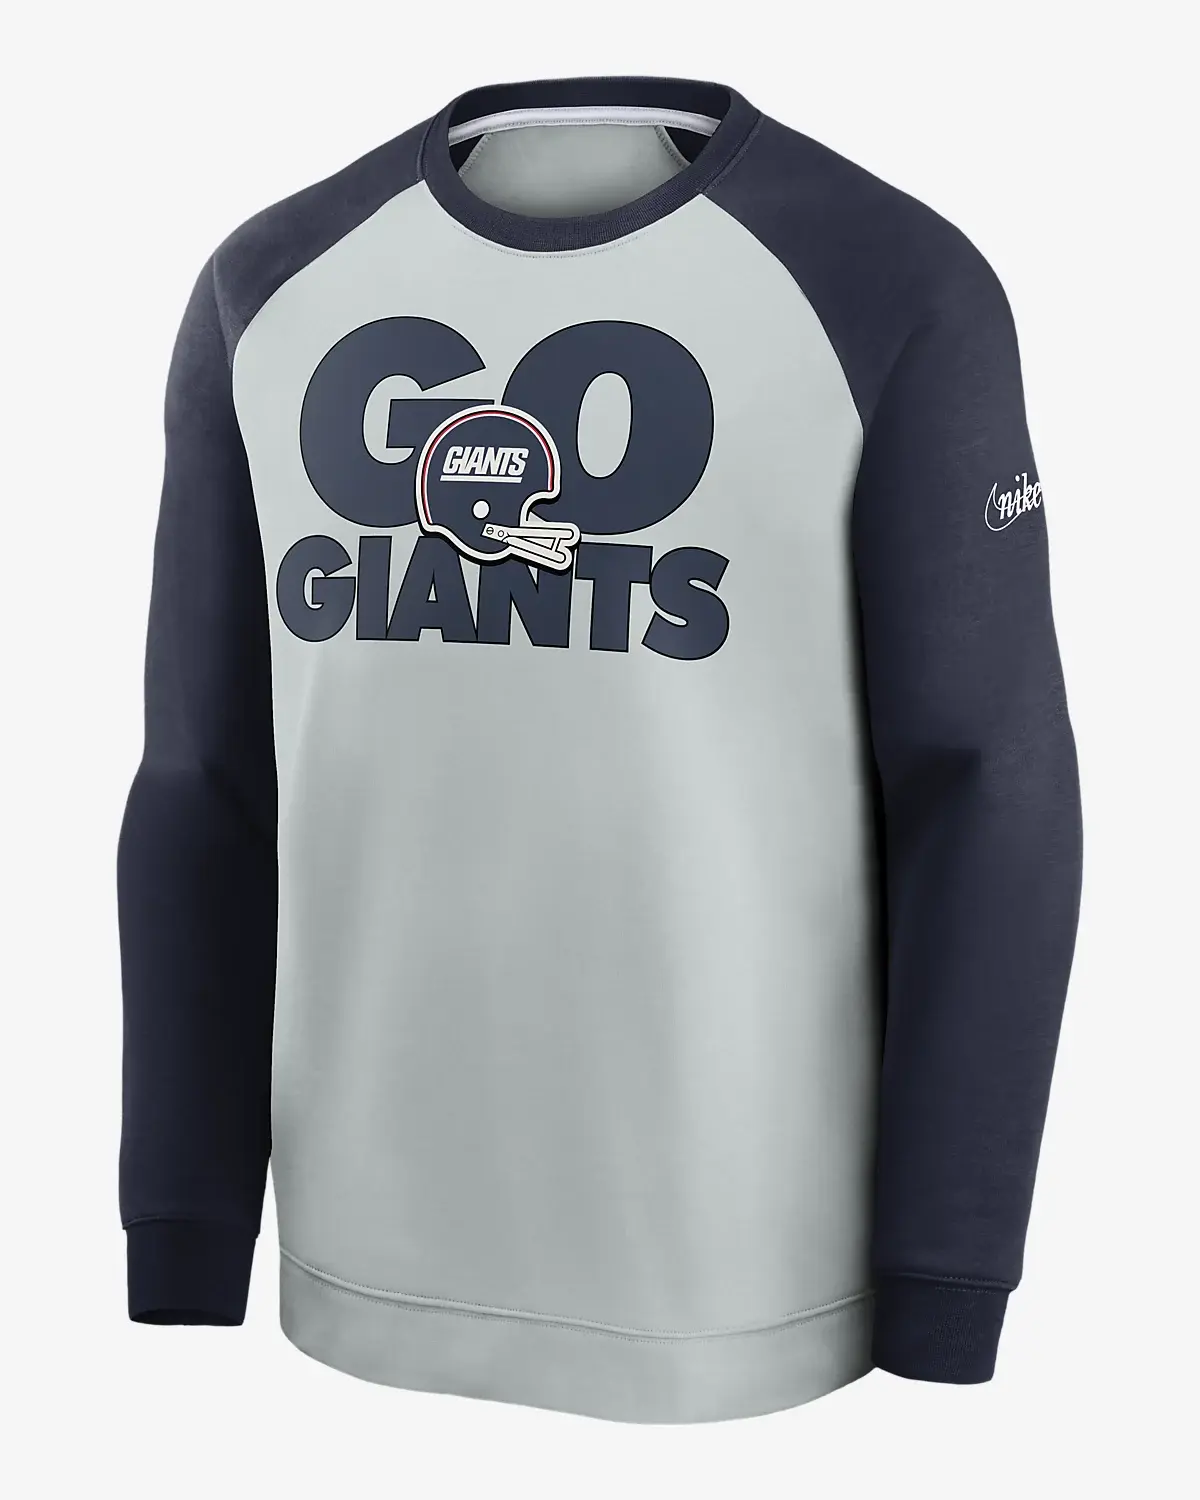 Nike Historic Raglan (NFL Giants). 1